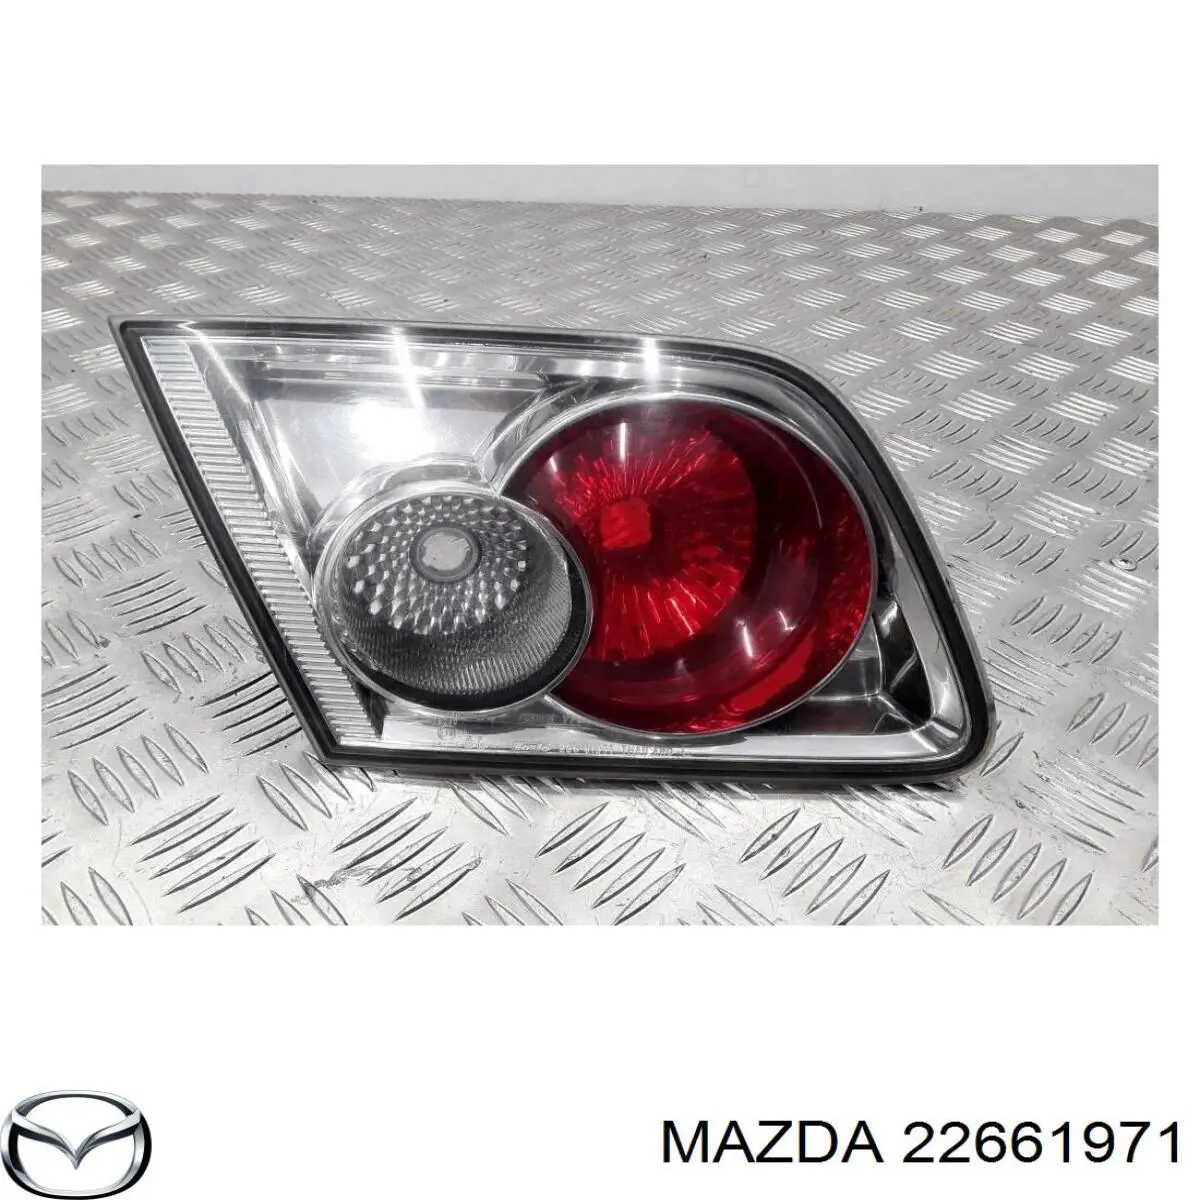 22661971 Mazda lanterna traseira direita interna